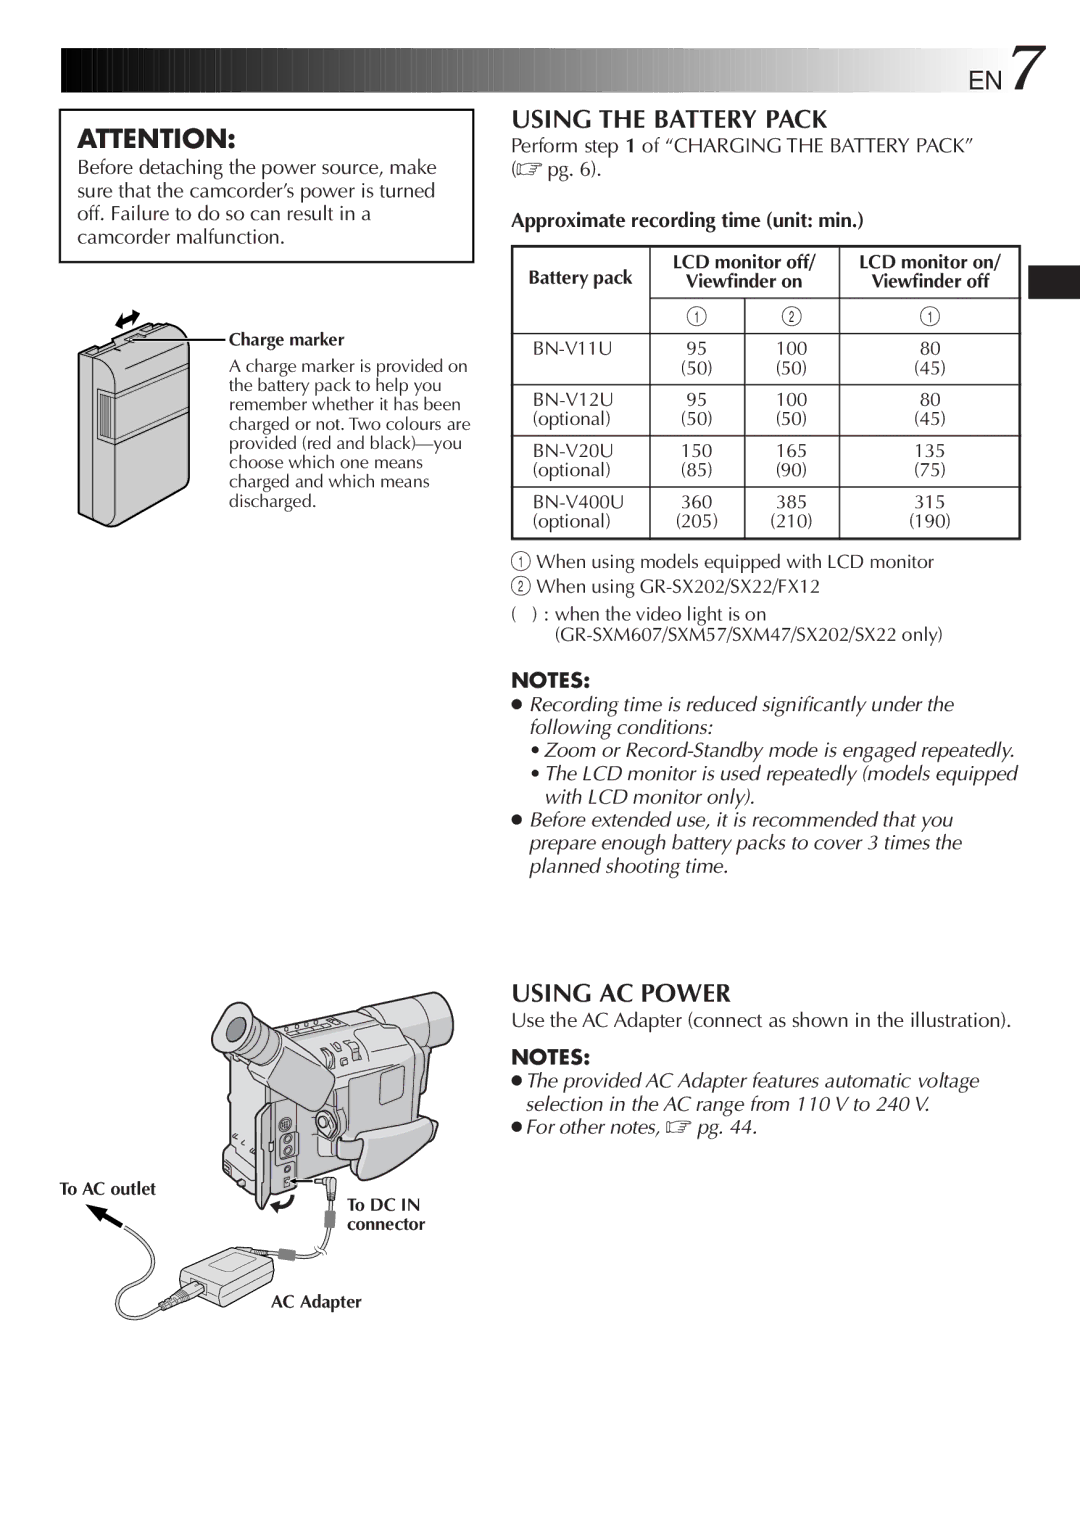 JVC GR-SX22, GR-FX12, GR-SX202, GR-SXM607 Using the Battery Pack, Using AC Power, Perform of Charging the Battery Pack pg 